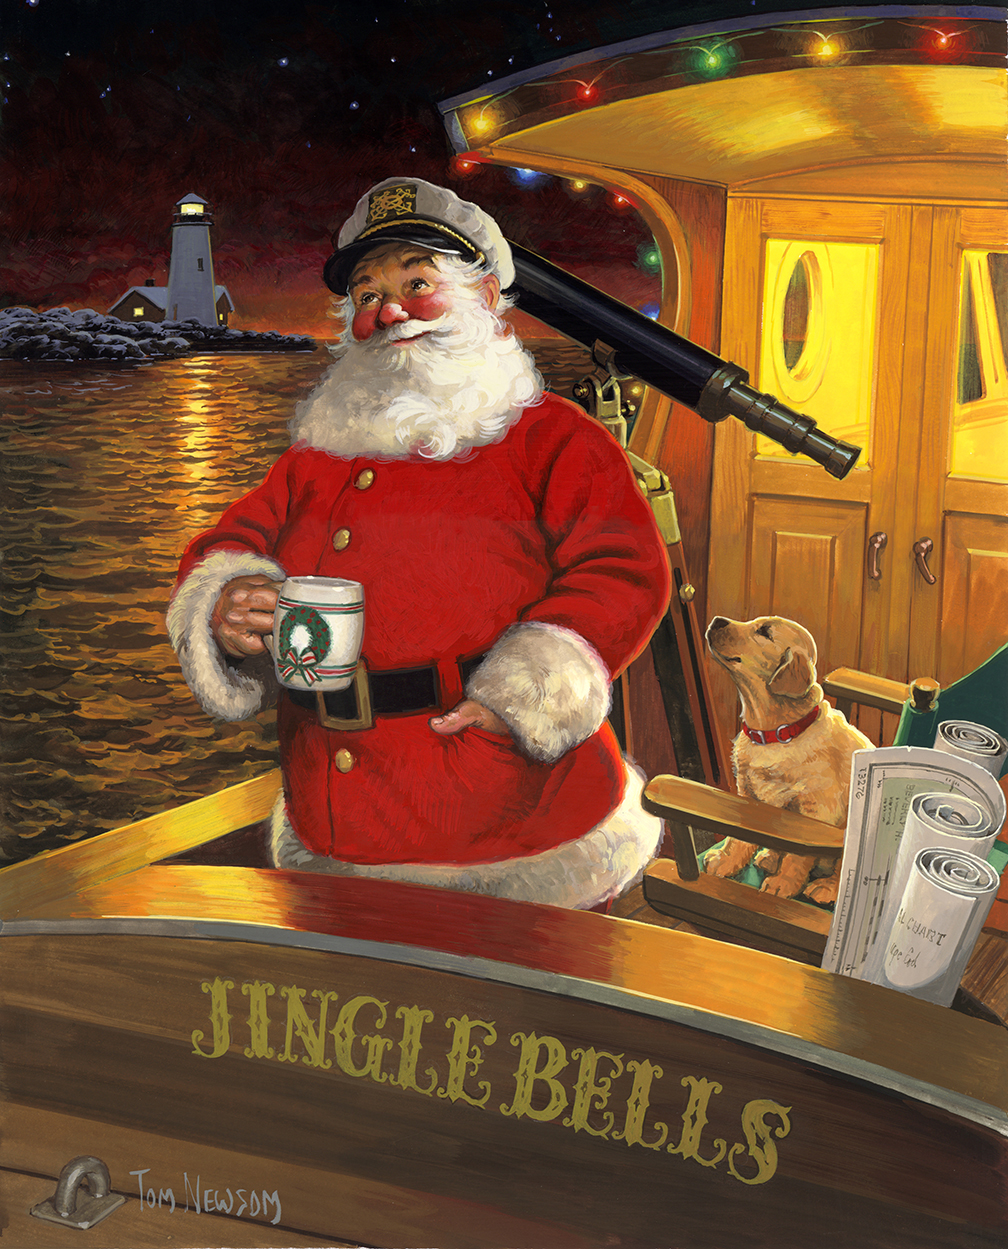 Santa's boat is aptly named Jingle Bells!